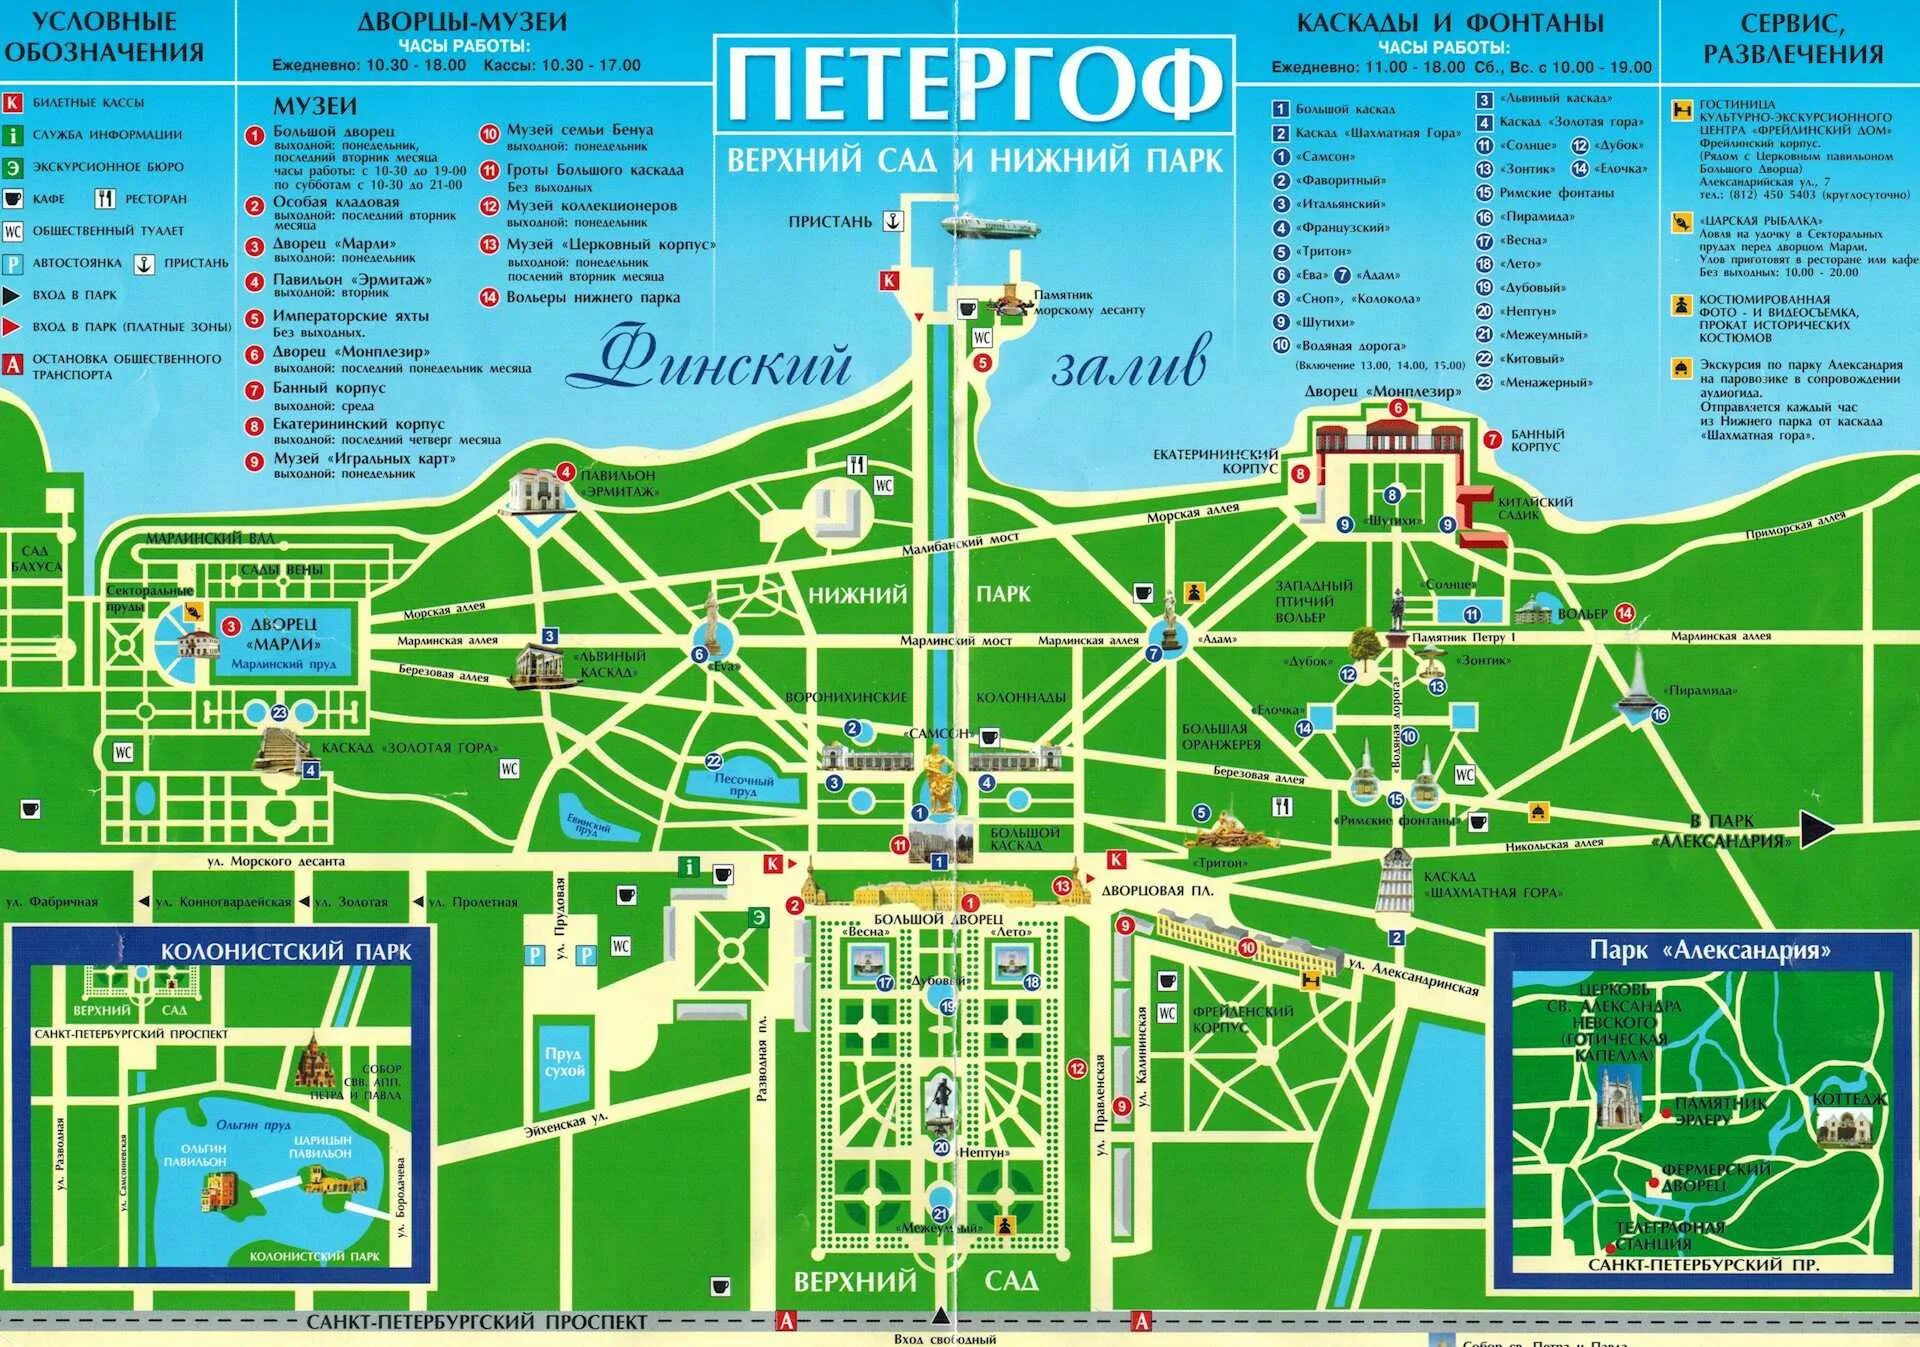 Петергоф схема парка. План парка Петергоф Нижний парк. Карта музея Петергоф. Схема Нижнего парка Петергофа.